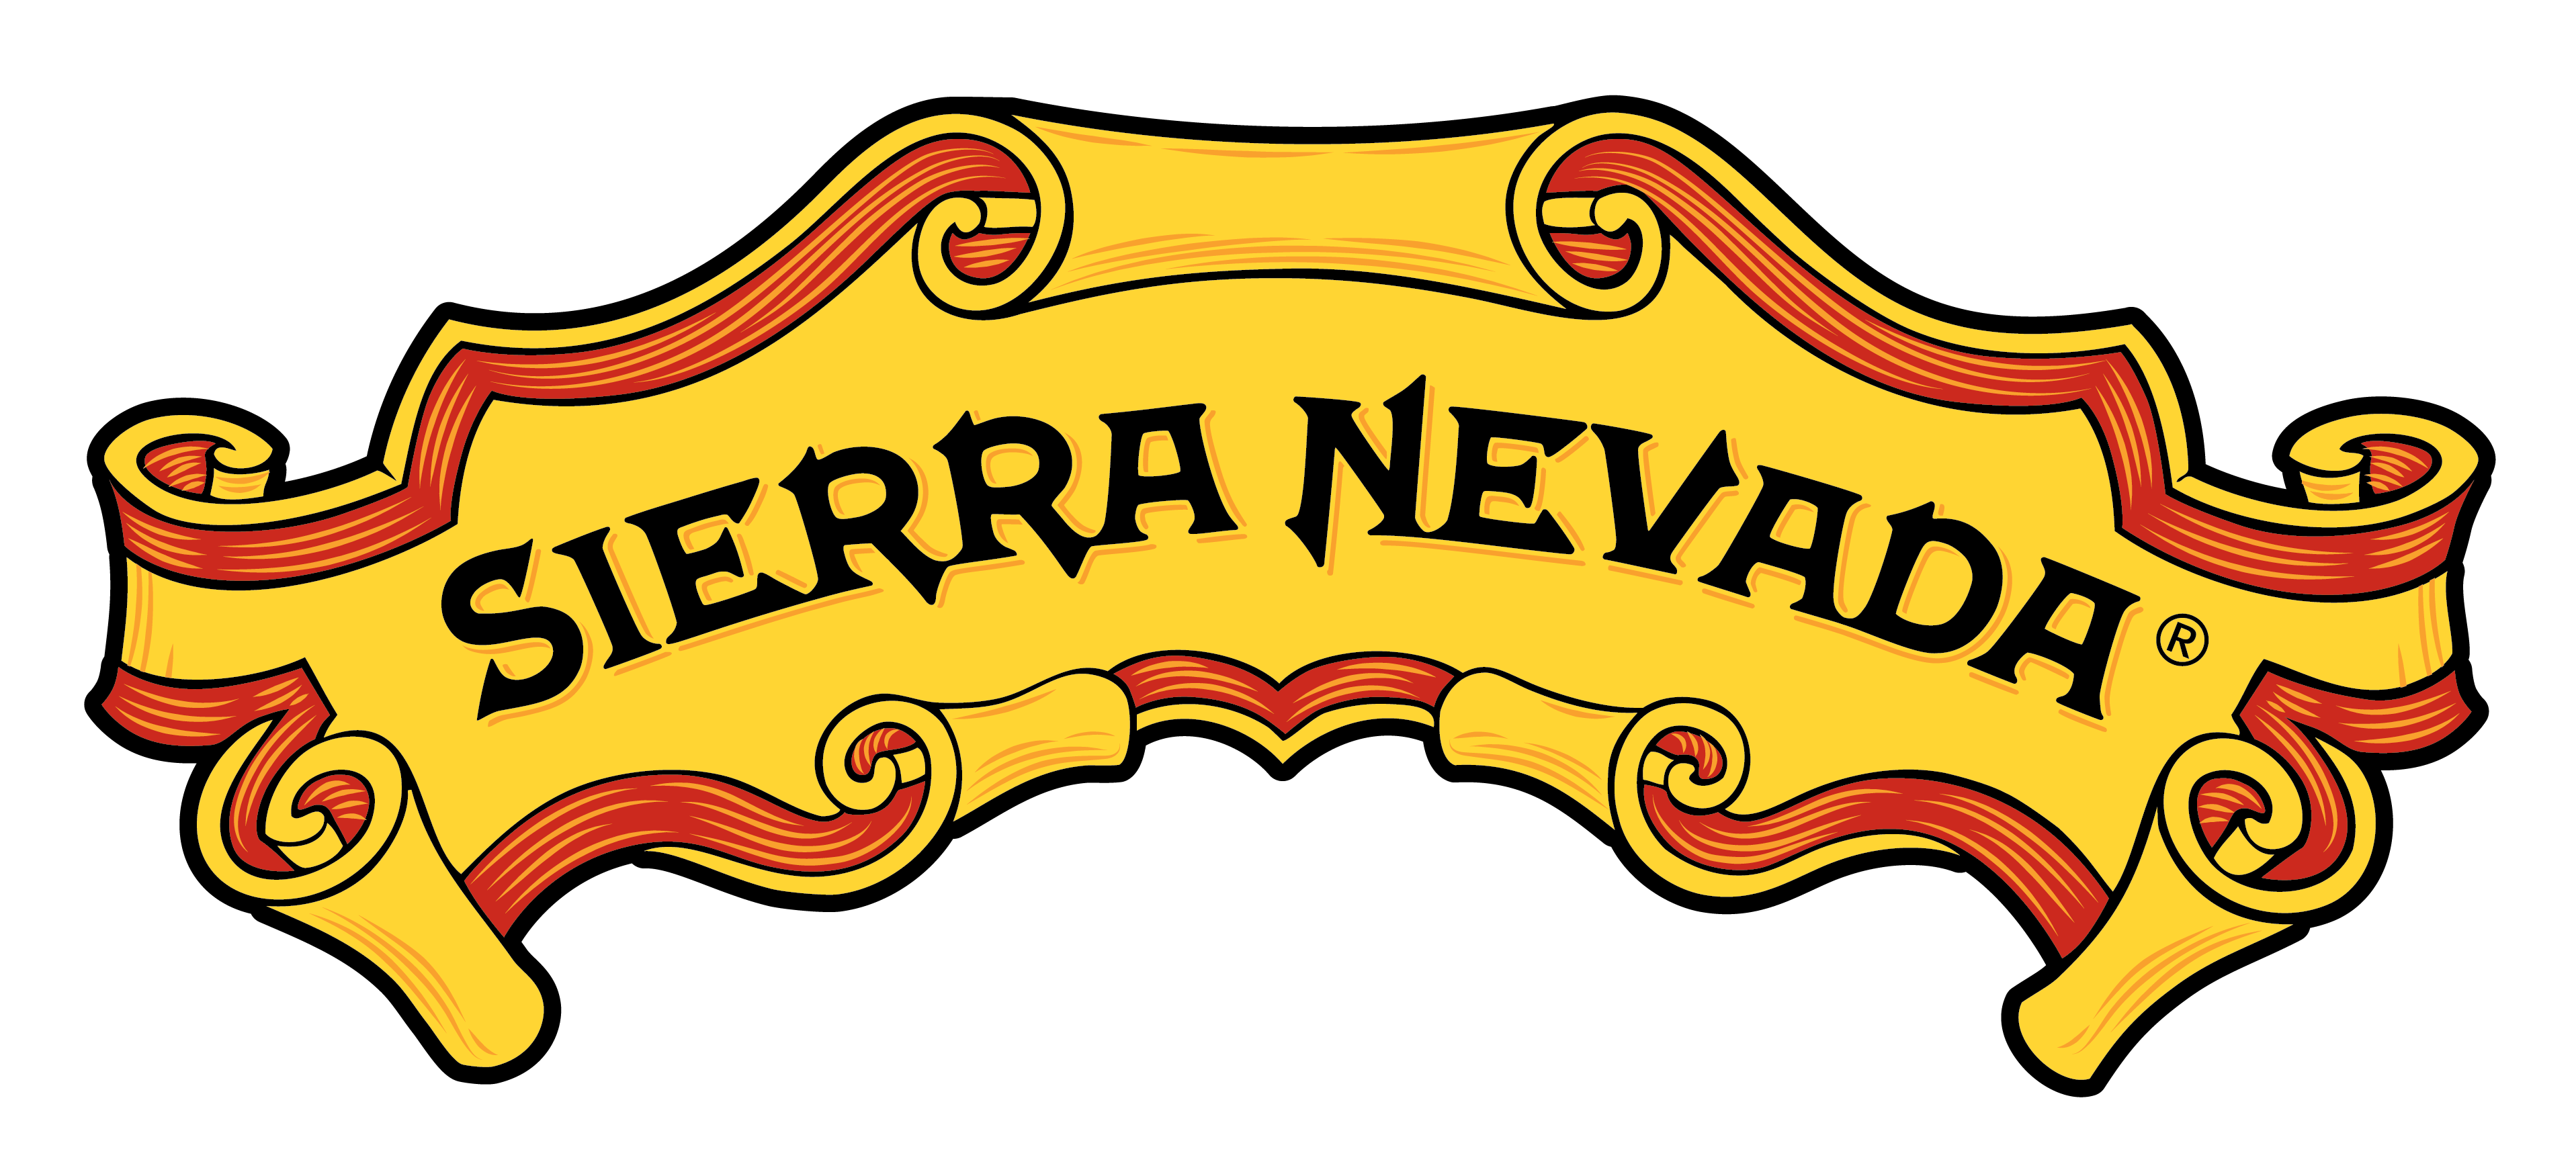 Sierra Nevada logo